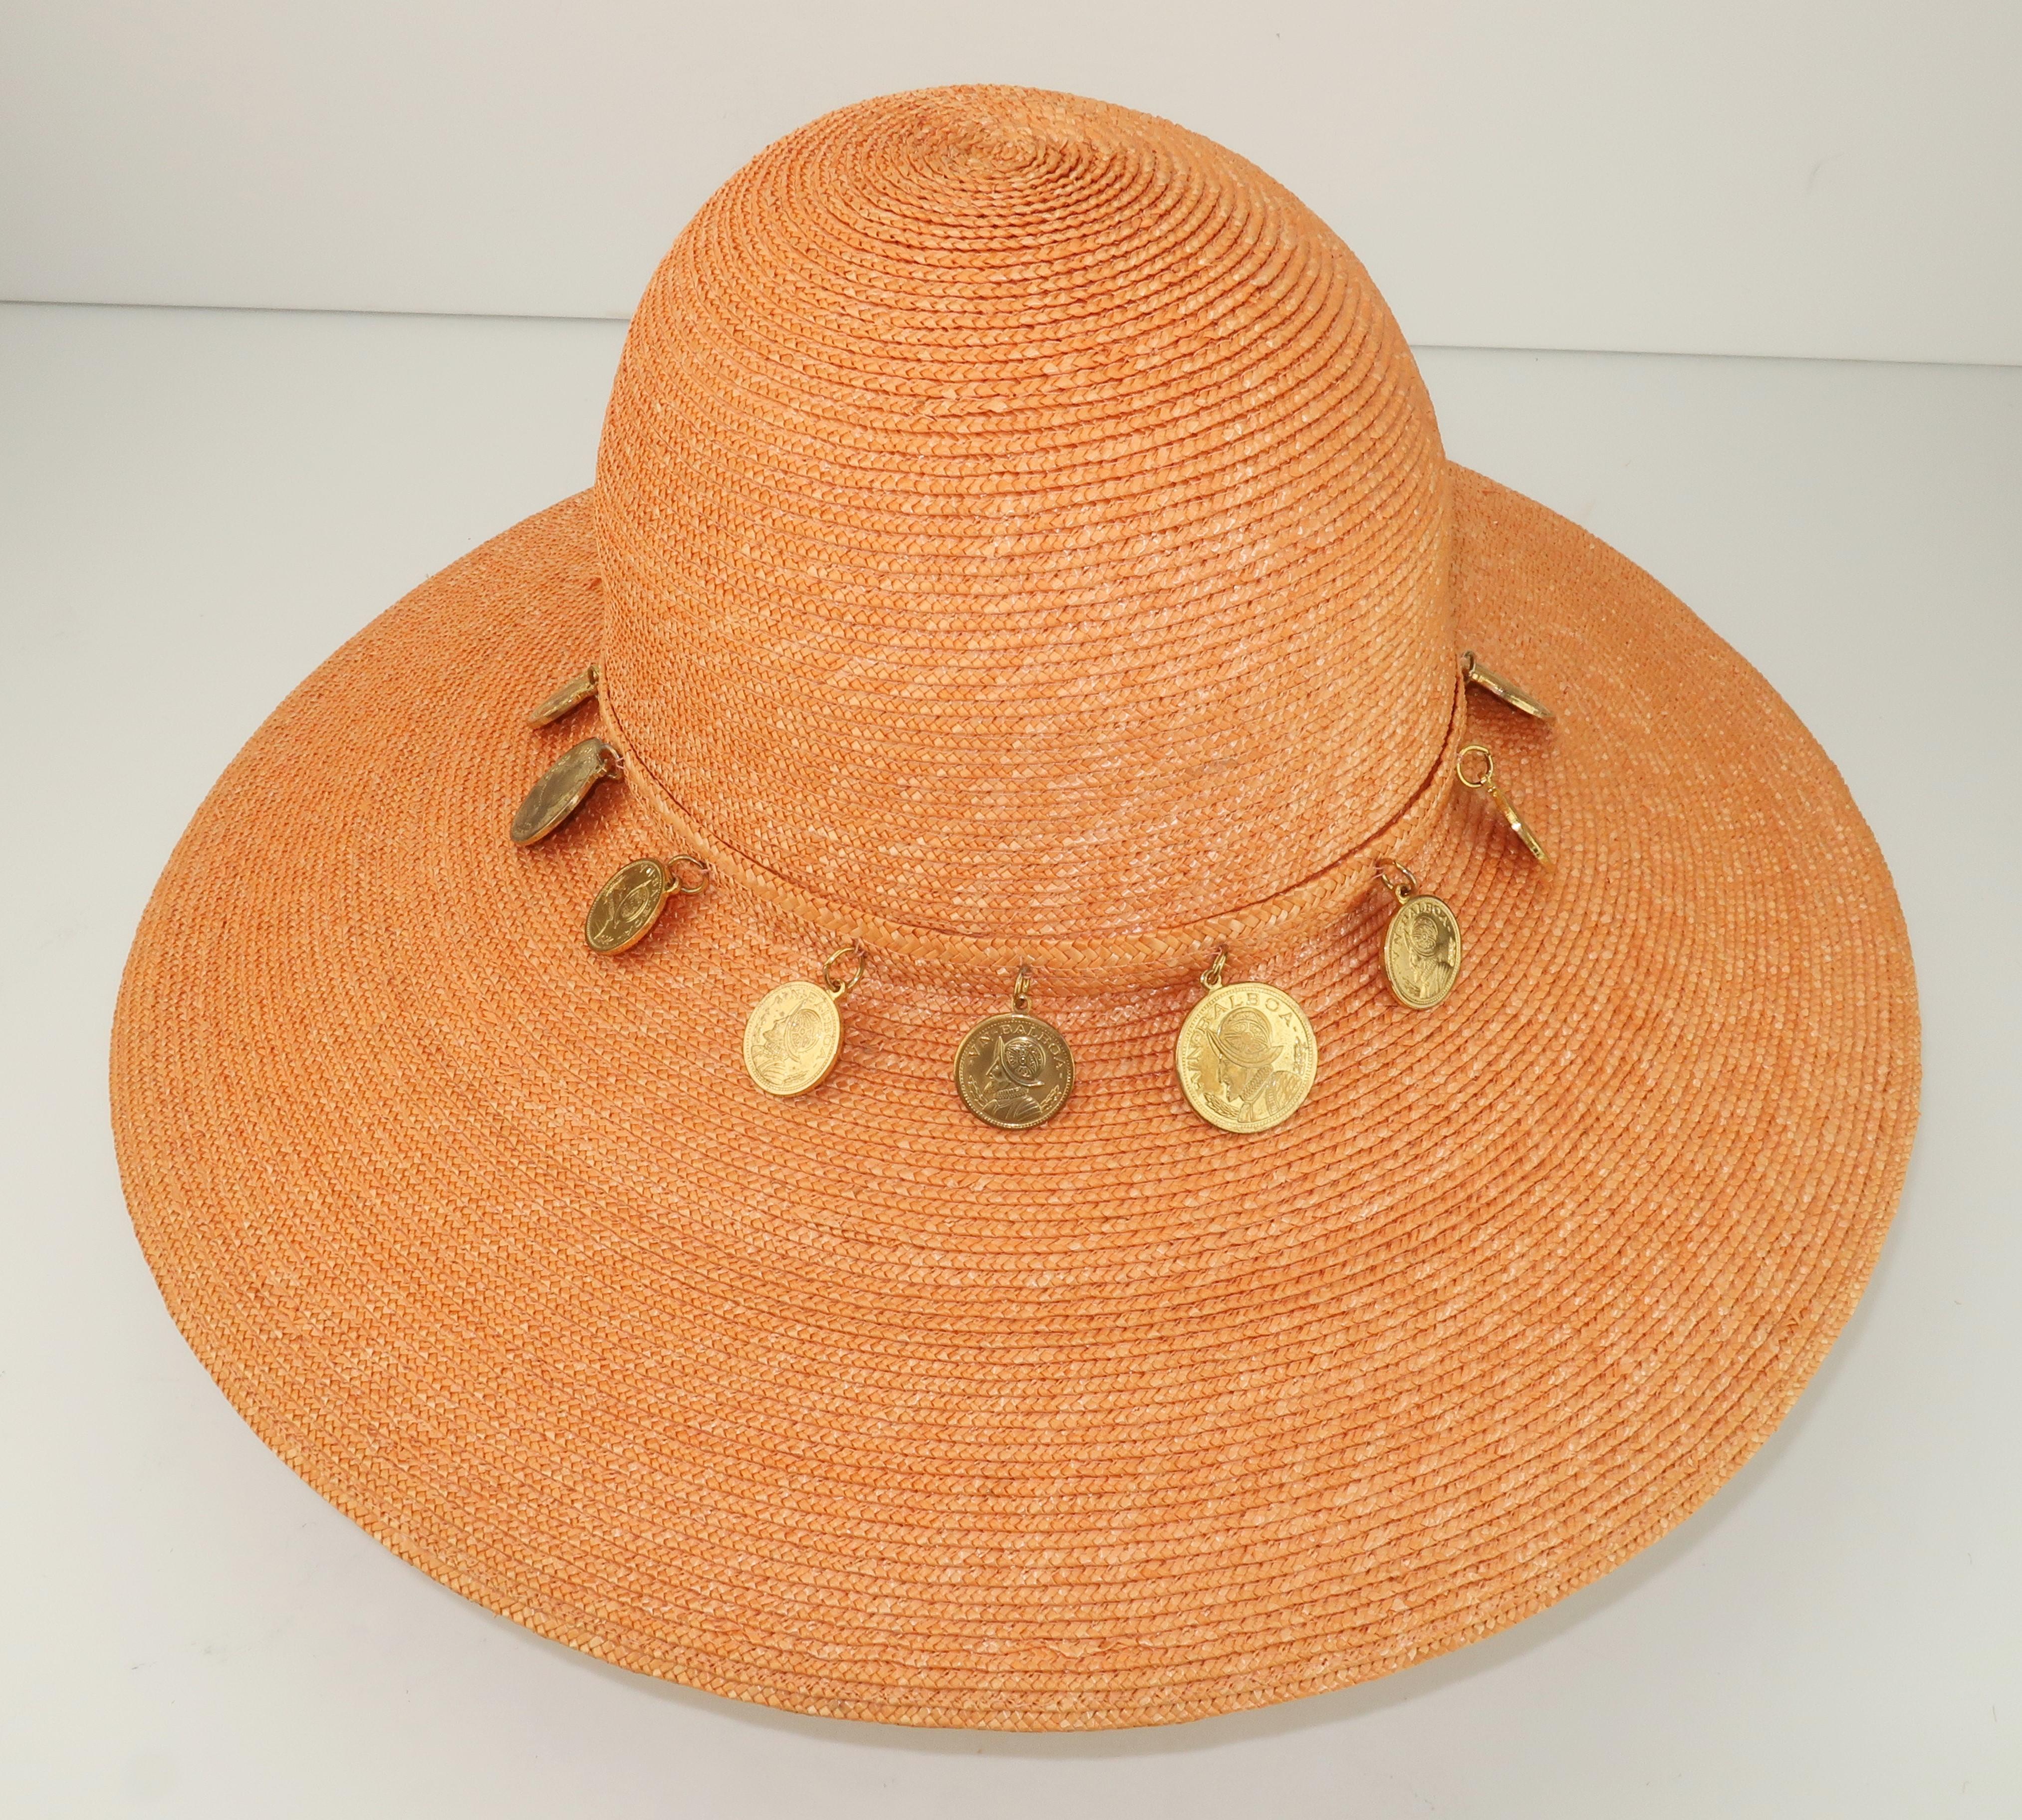 Vintage Wide Brim Straw Hat With Gold Coins 2